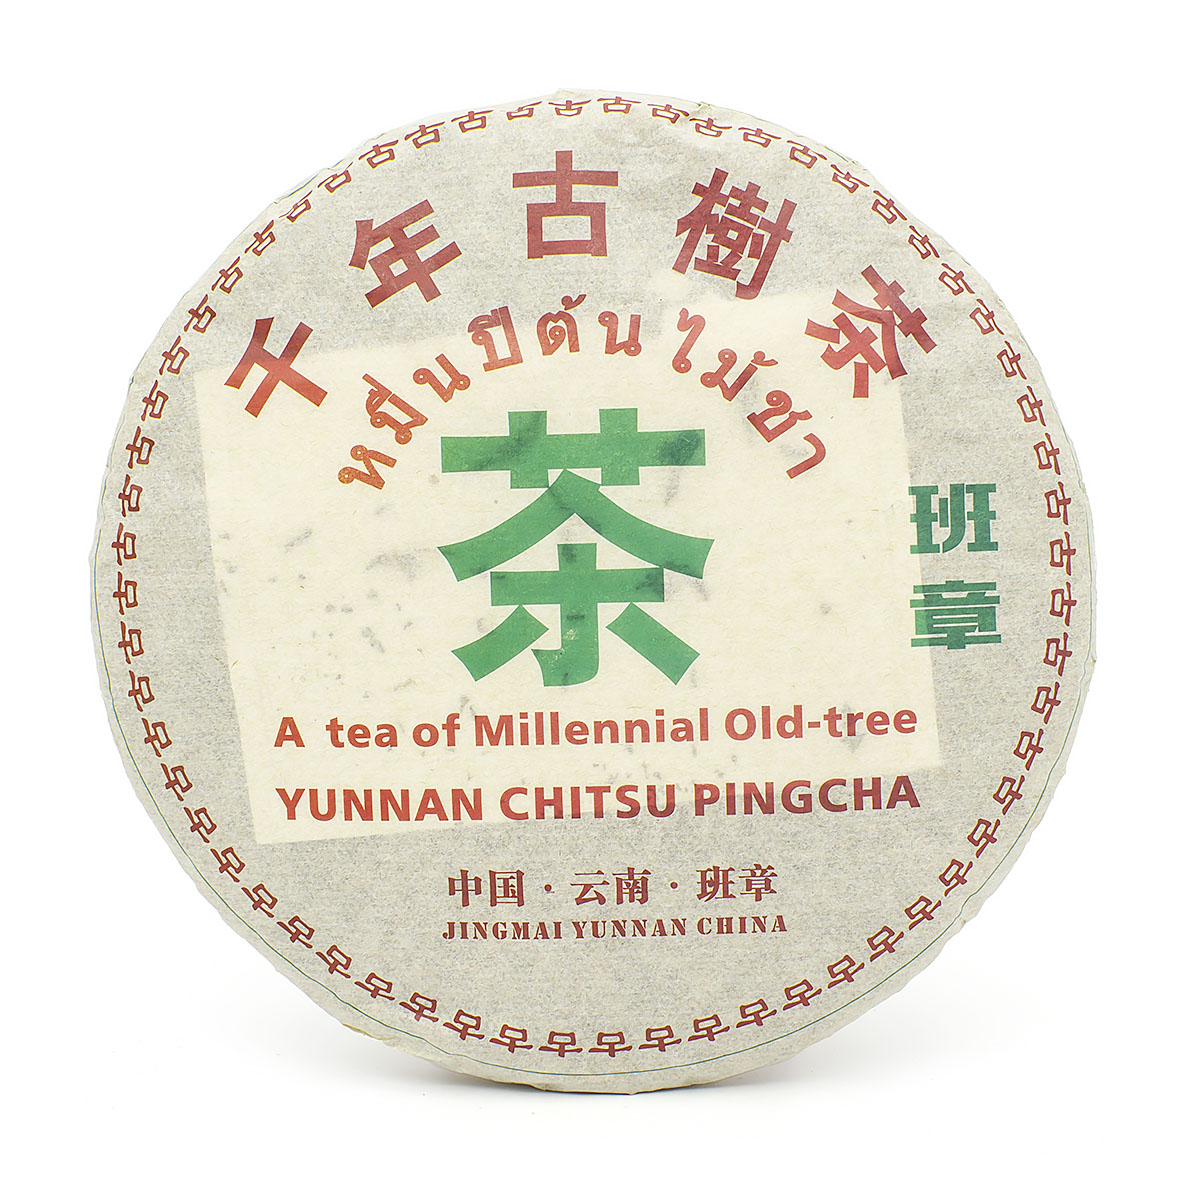 Шен Пуэр Чай со старых деревьев тысячи лет, фабрика Цзин май, Юньнань, 2010 г, блин, 357 гр.